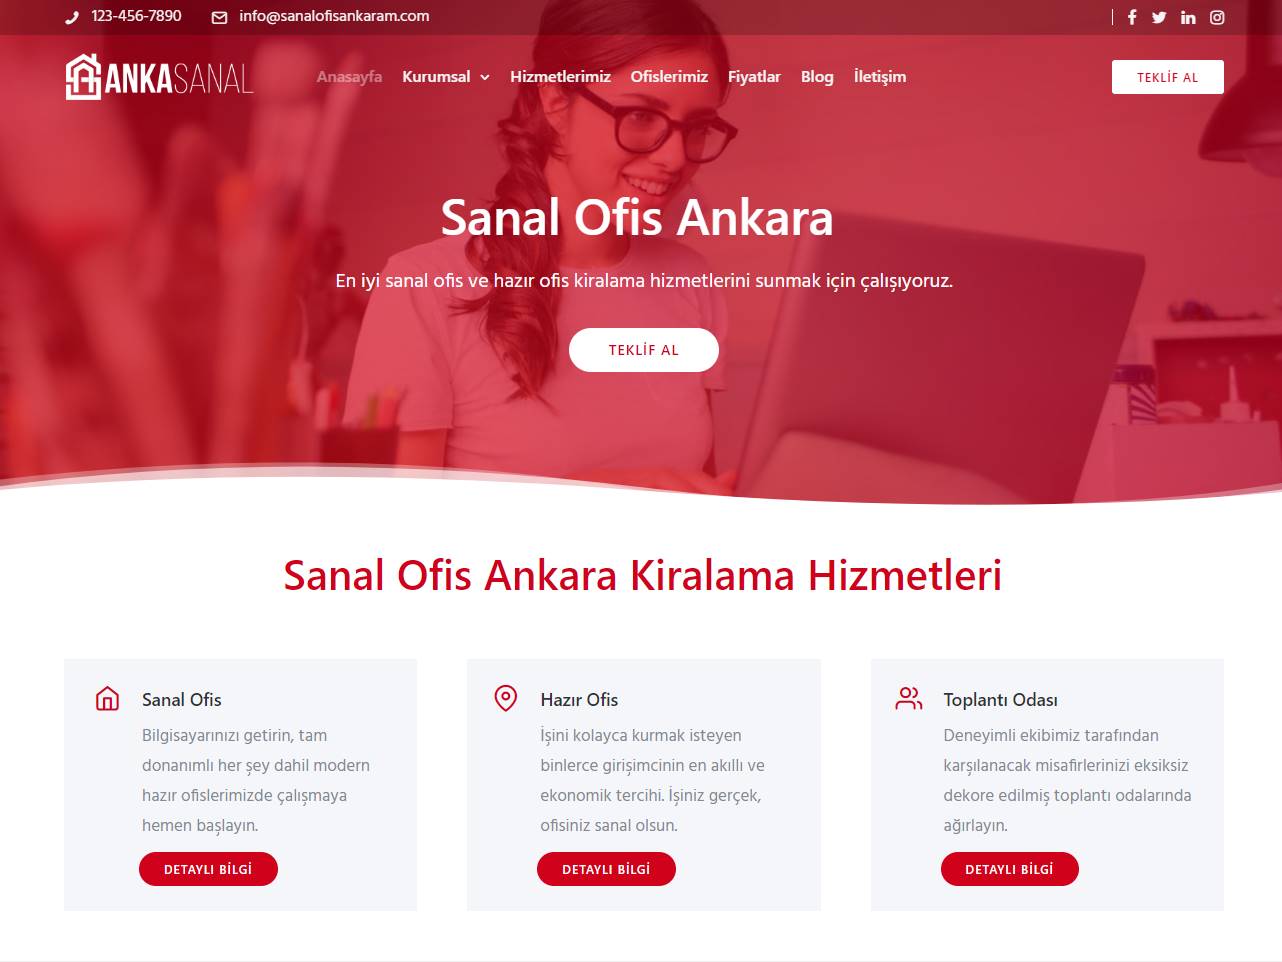 Sanal Ofis Ankara